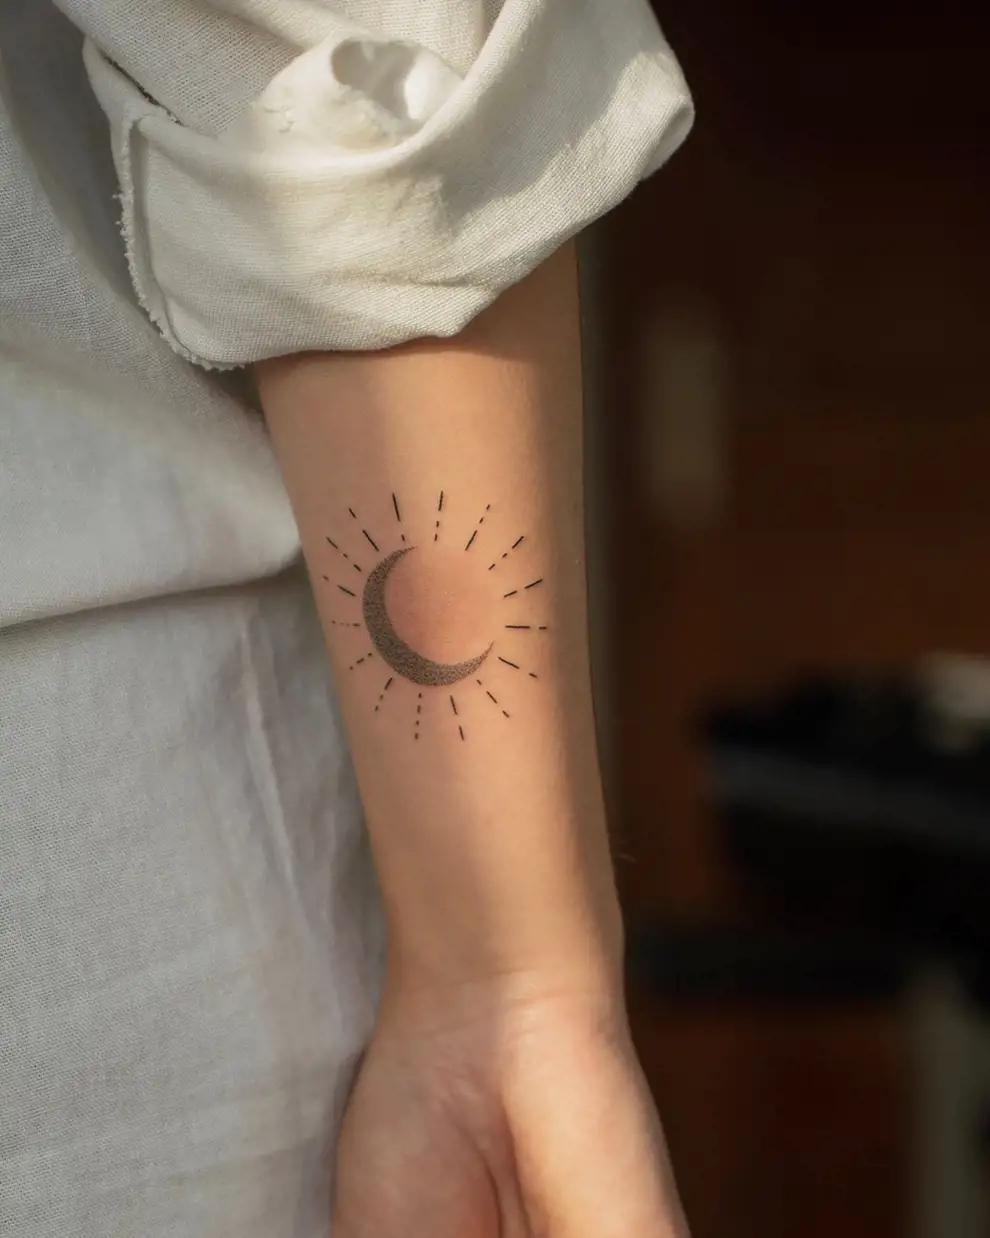 Tatuaje sol y luna minimalista: handpoke